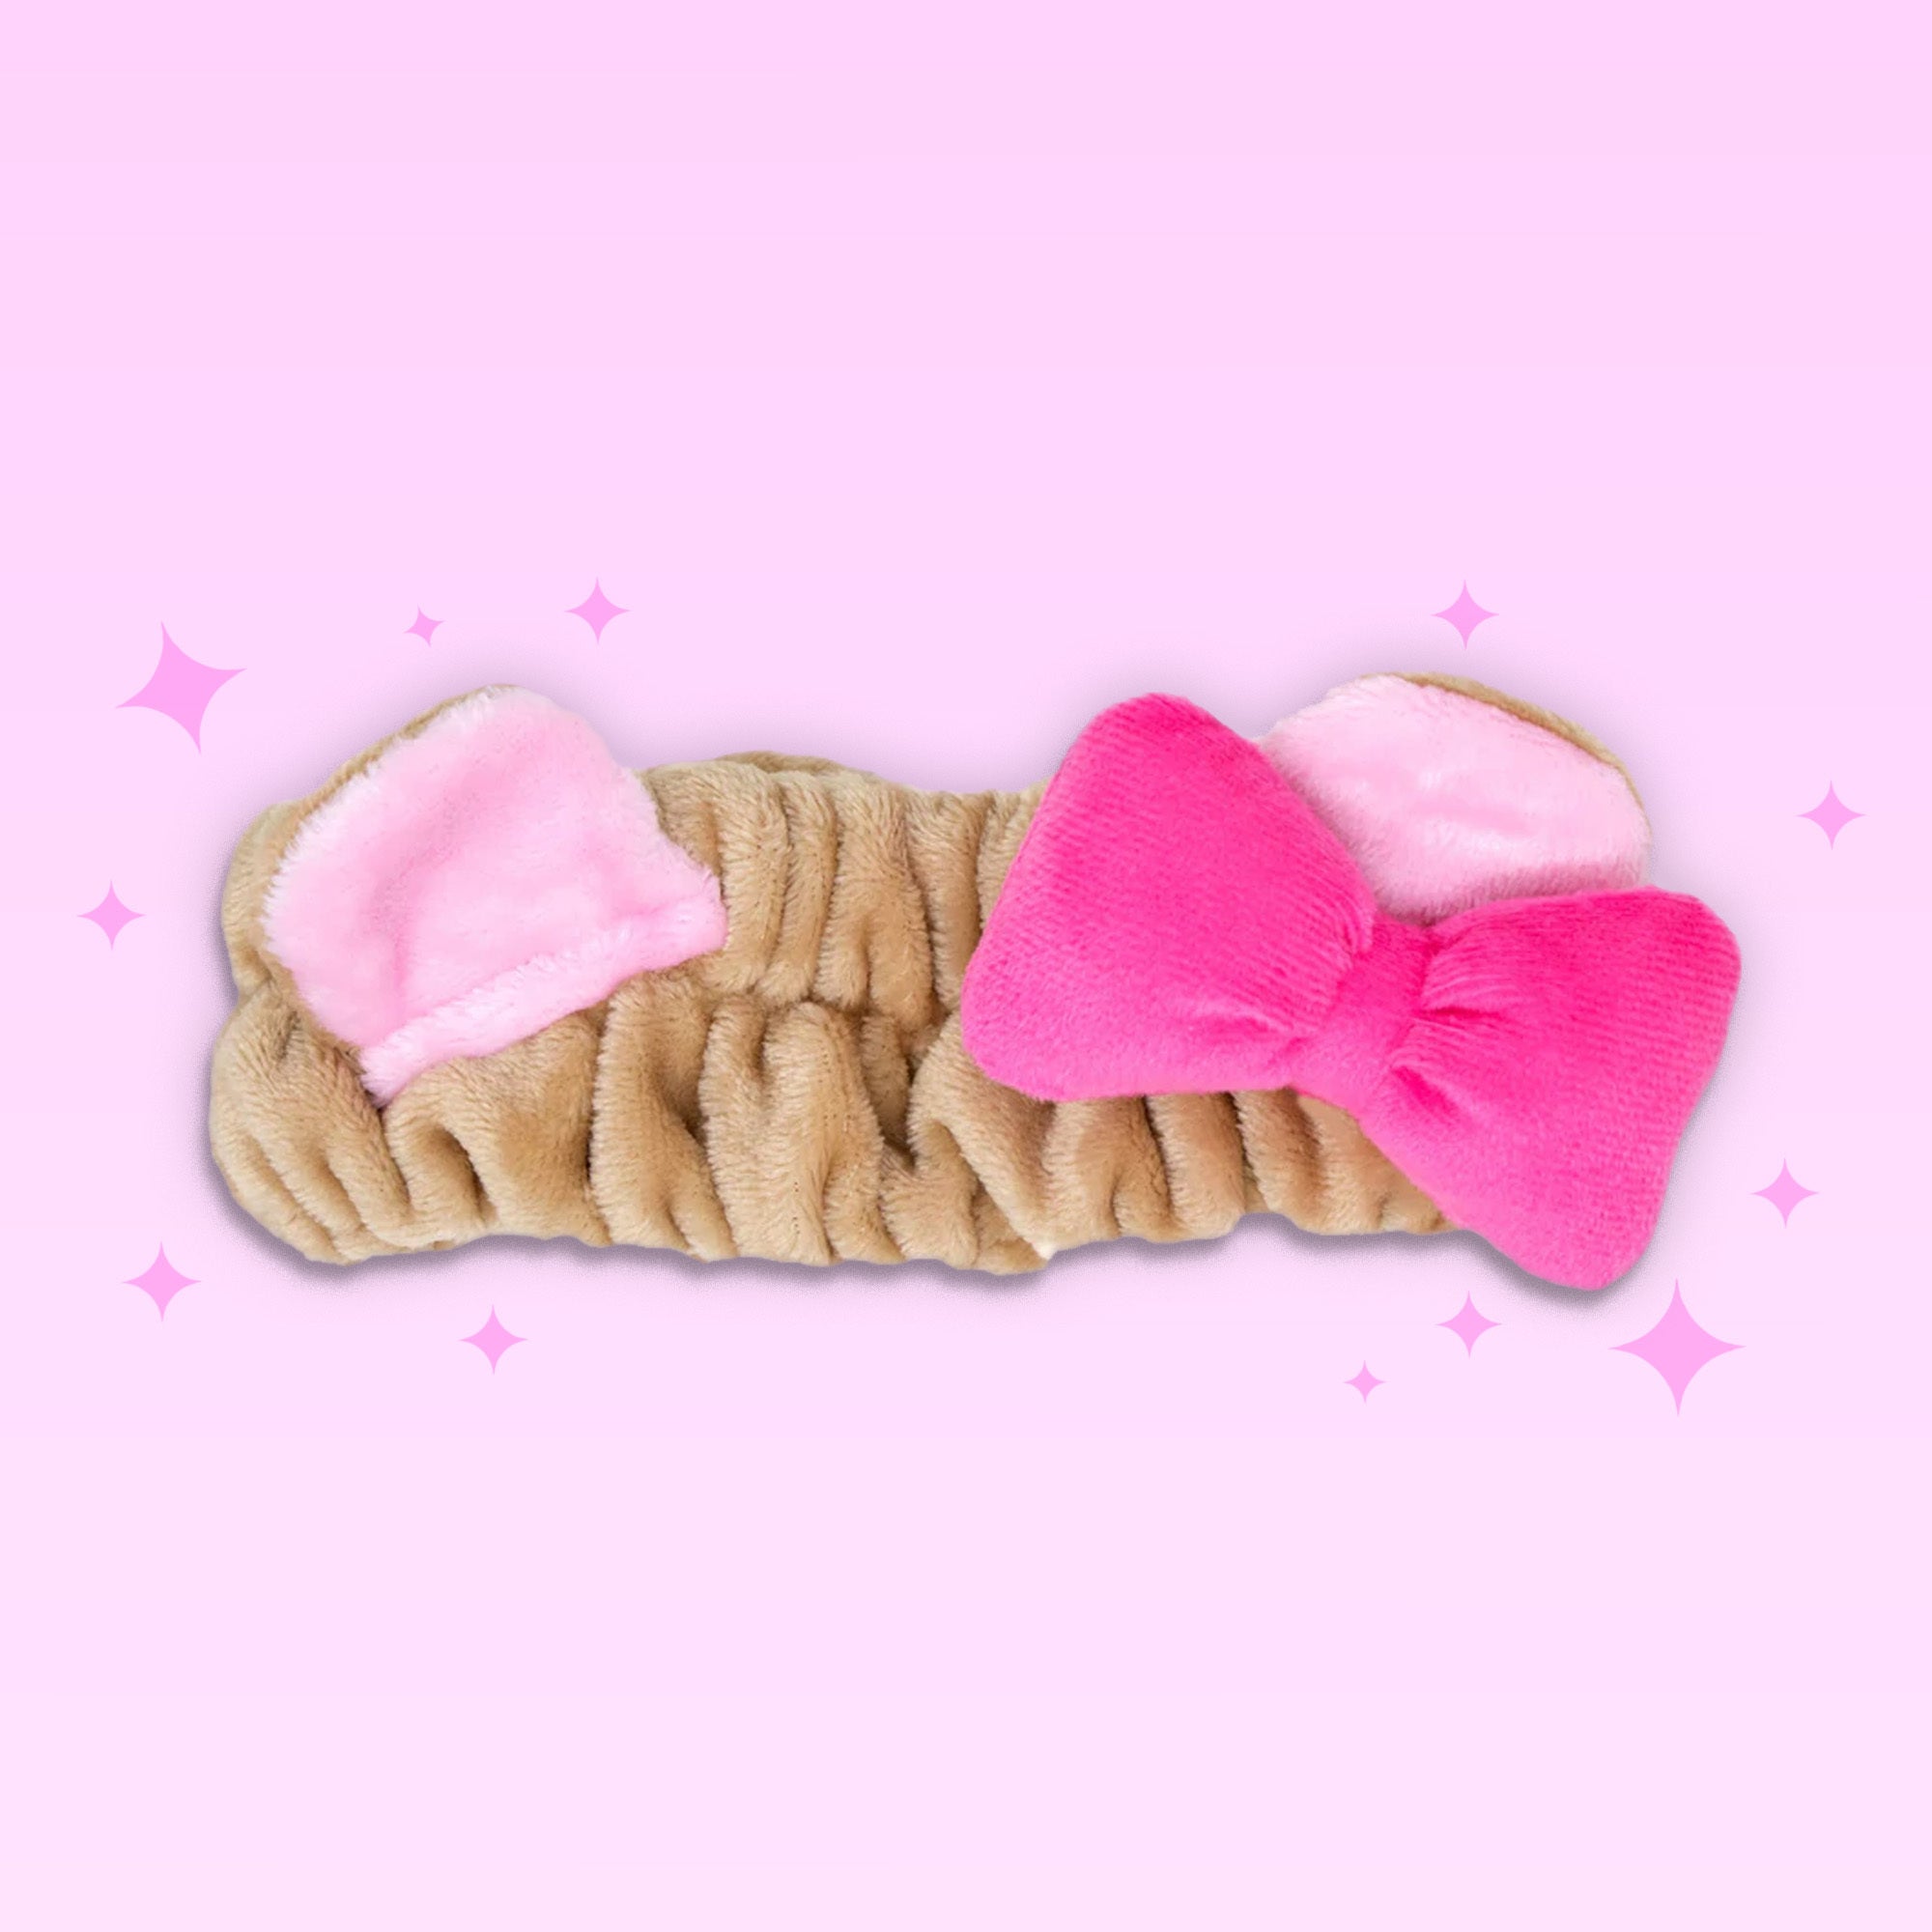 3D Teddy Headyband™ in “Beary Cute” | Cruelty-Free & Vegan Headbands The Crème Shop 